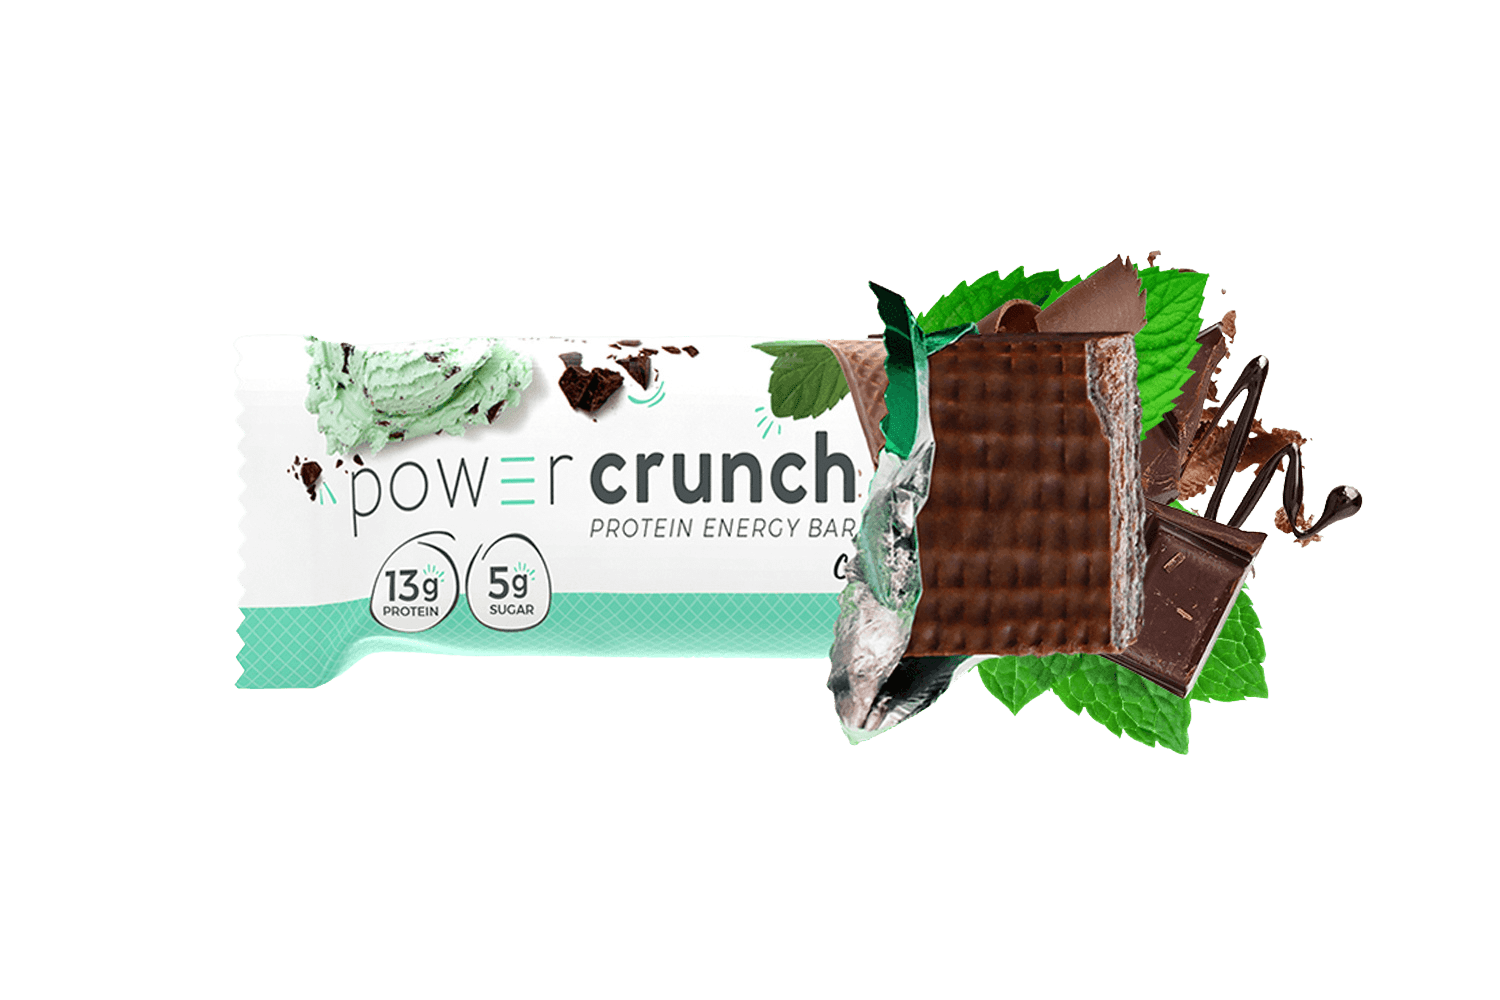 Chocolate Mint - Power CrunchPower Crunch Original